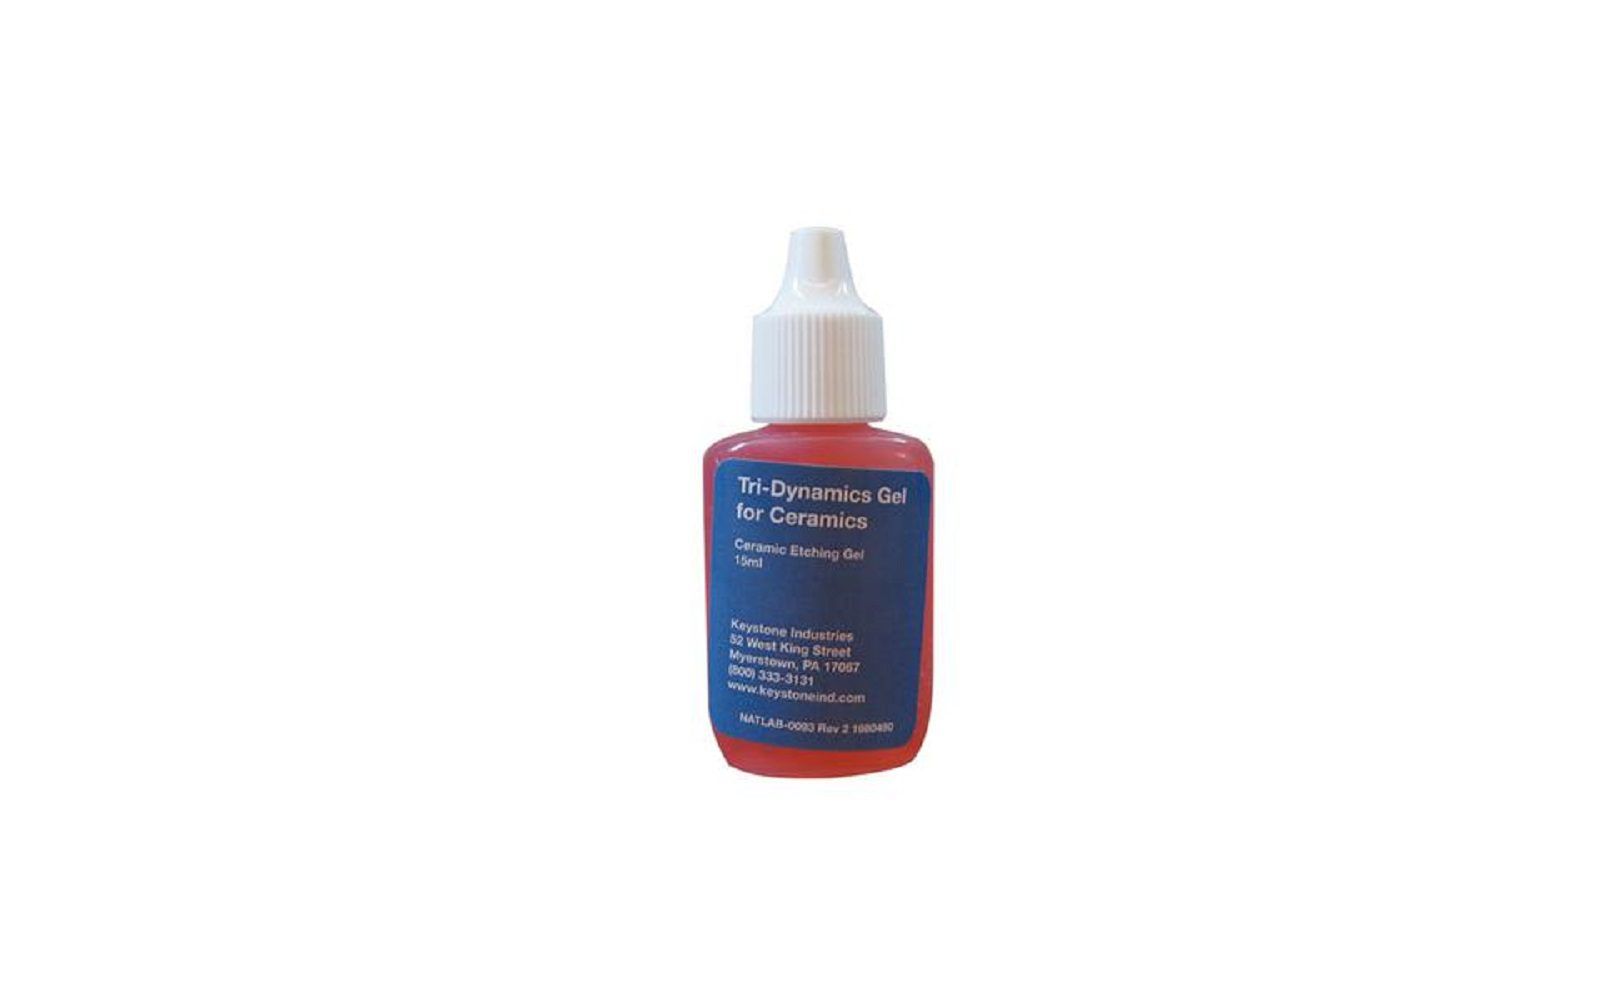 Tri-dynamics gel for ceramics etching gel – 15 ml bottle